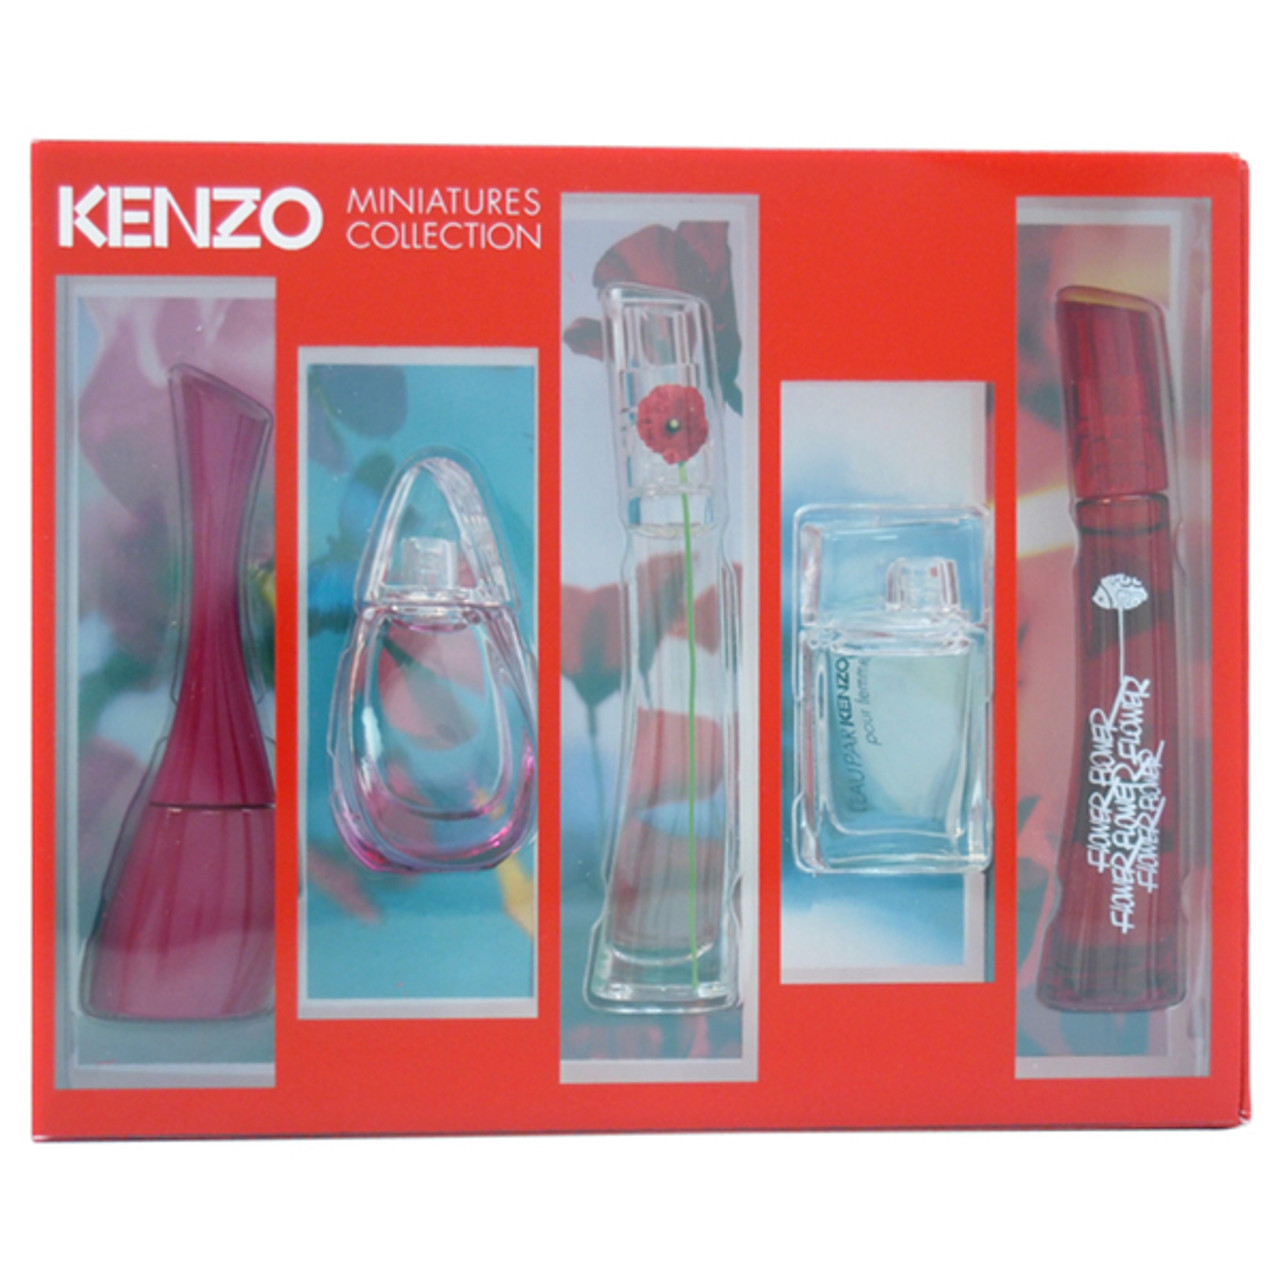 kenzo perfume set